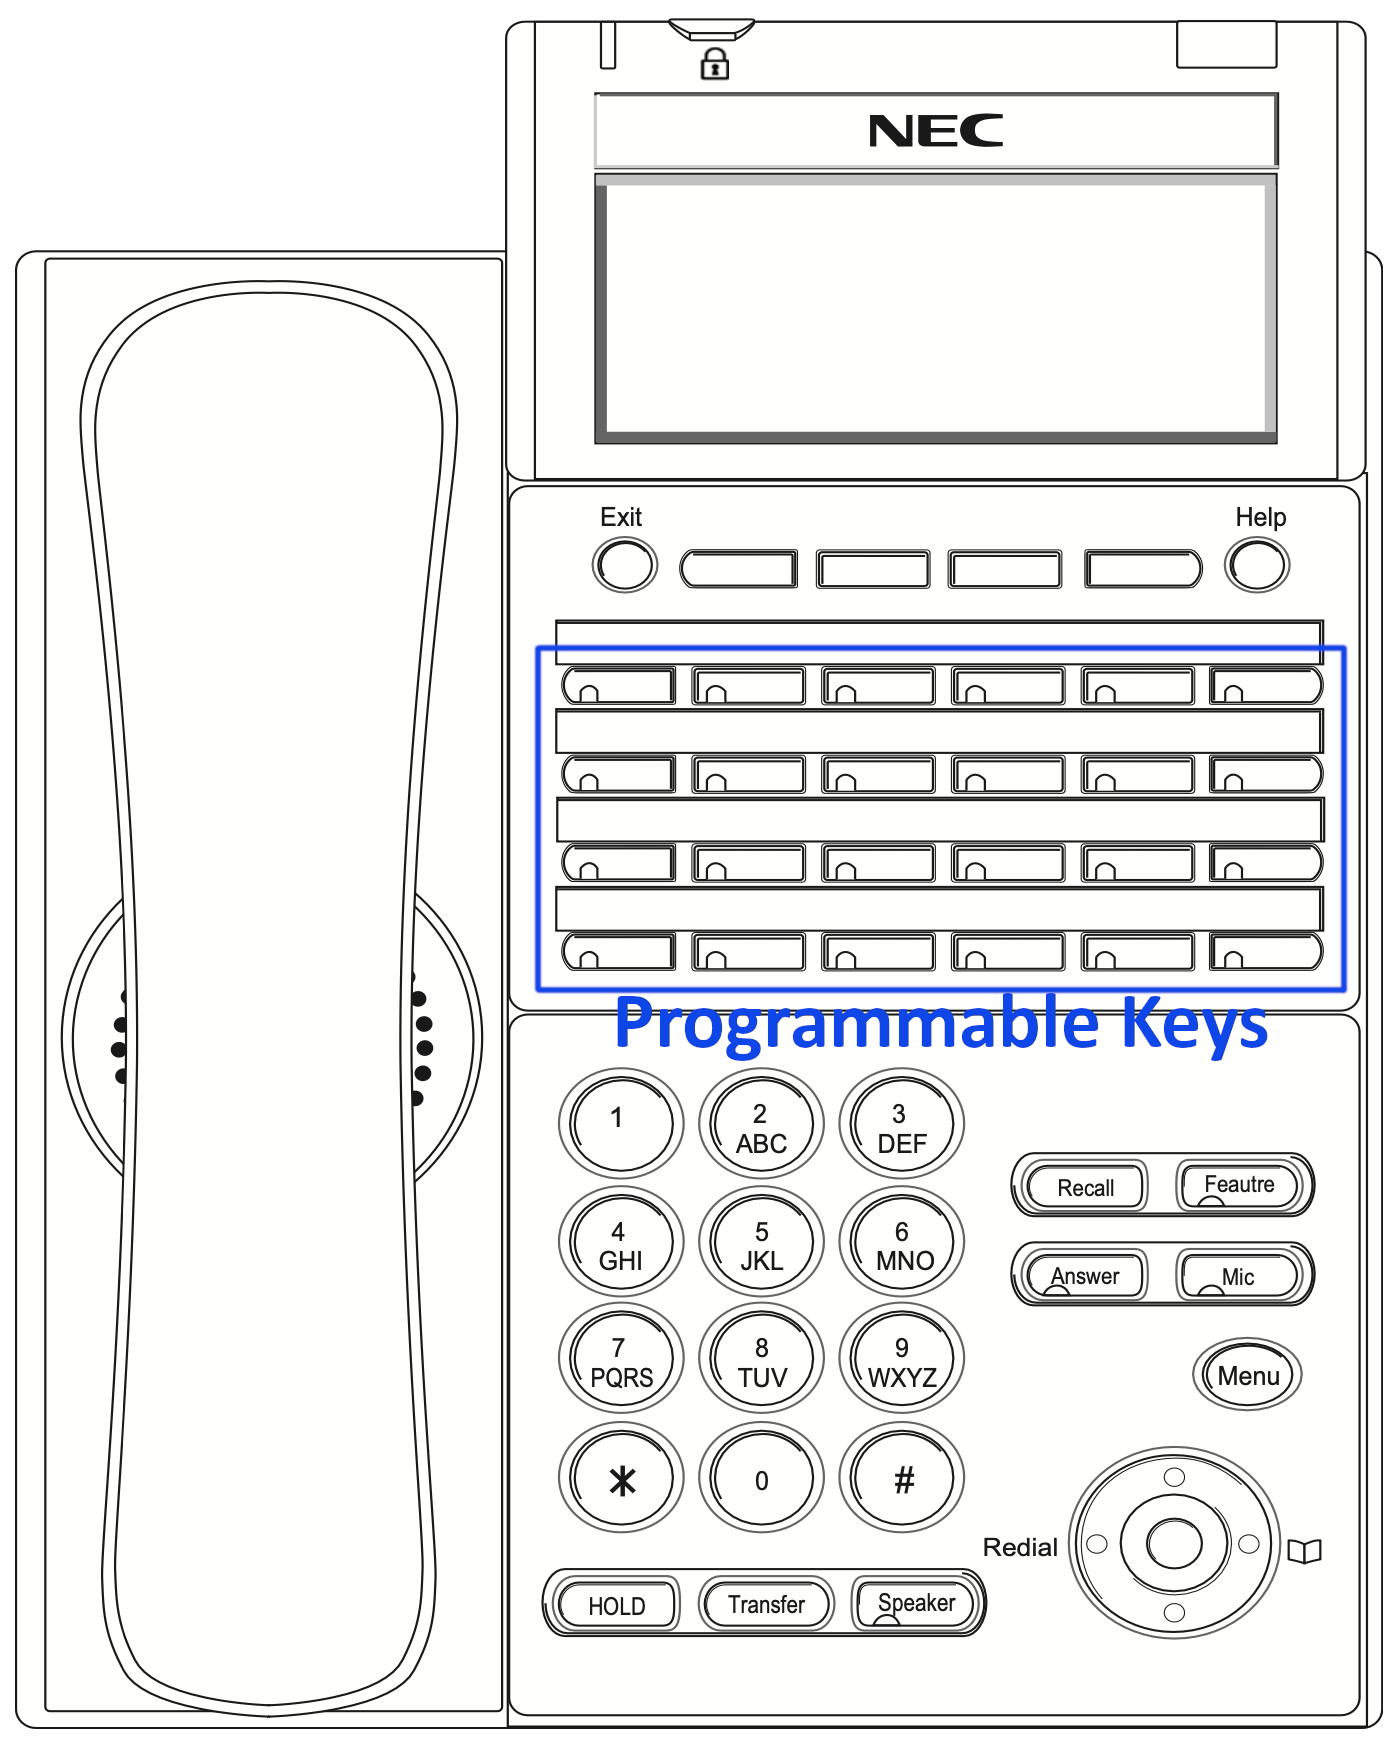 NEC DT730, DT800, DT920 Phone keypad layout